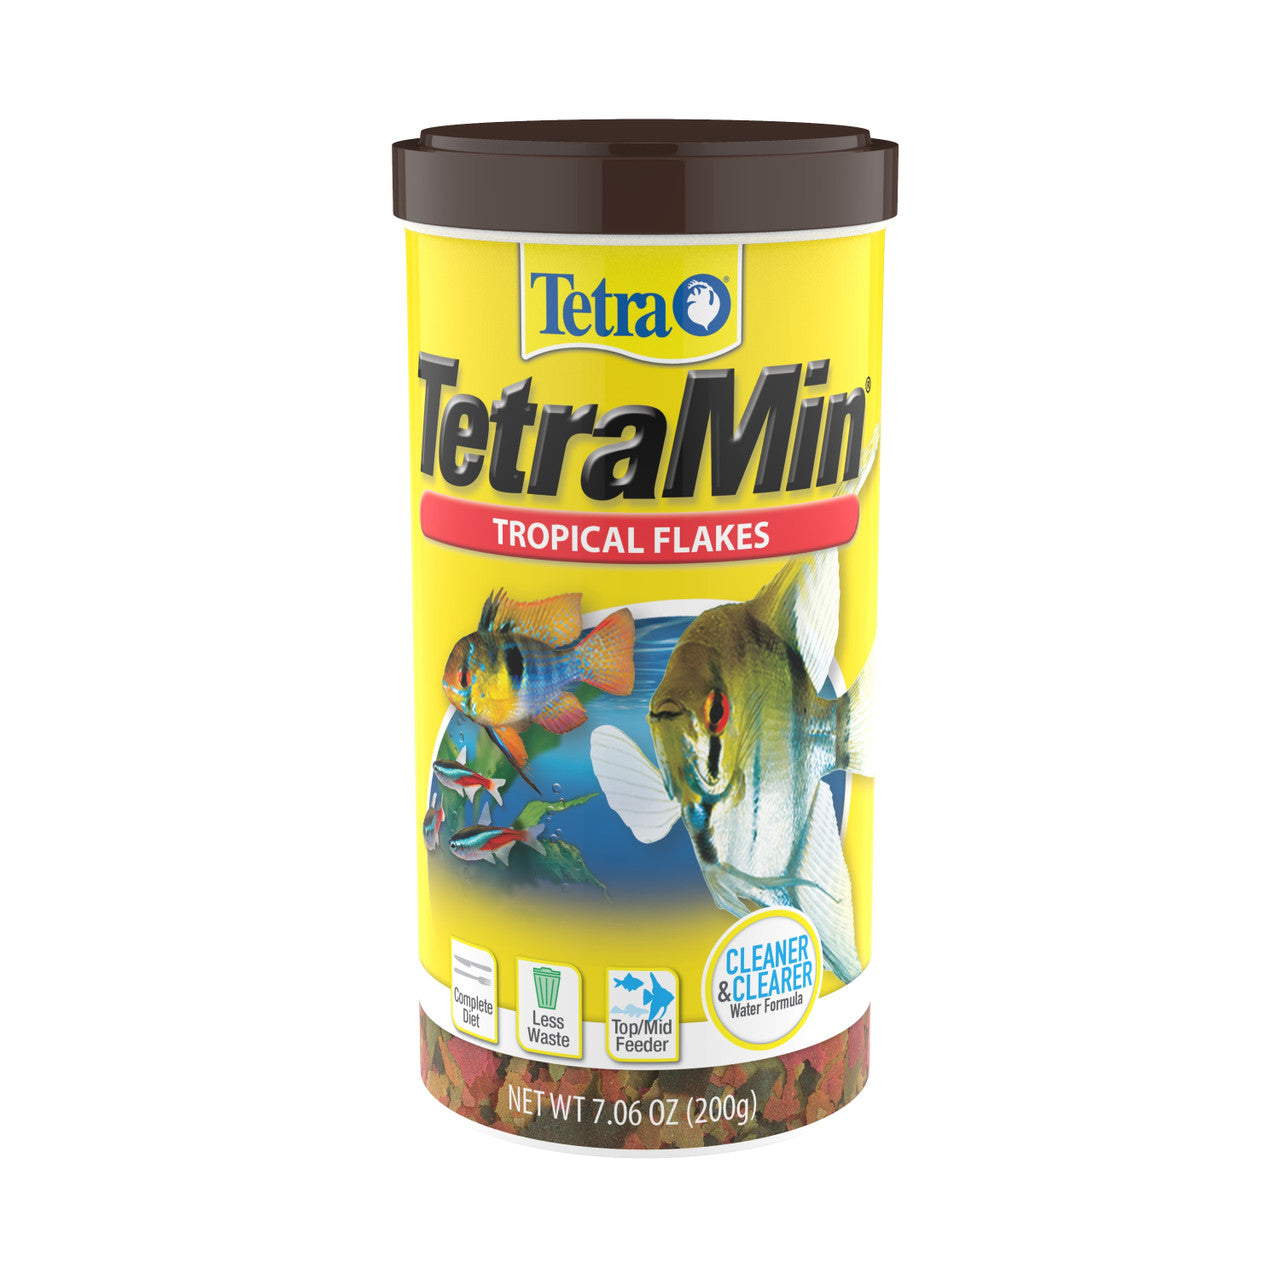 Tetra TetraMin Tropical Flakes Fish Food 7.06oz